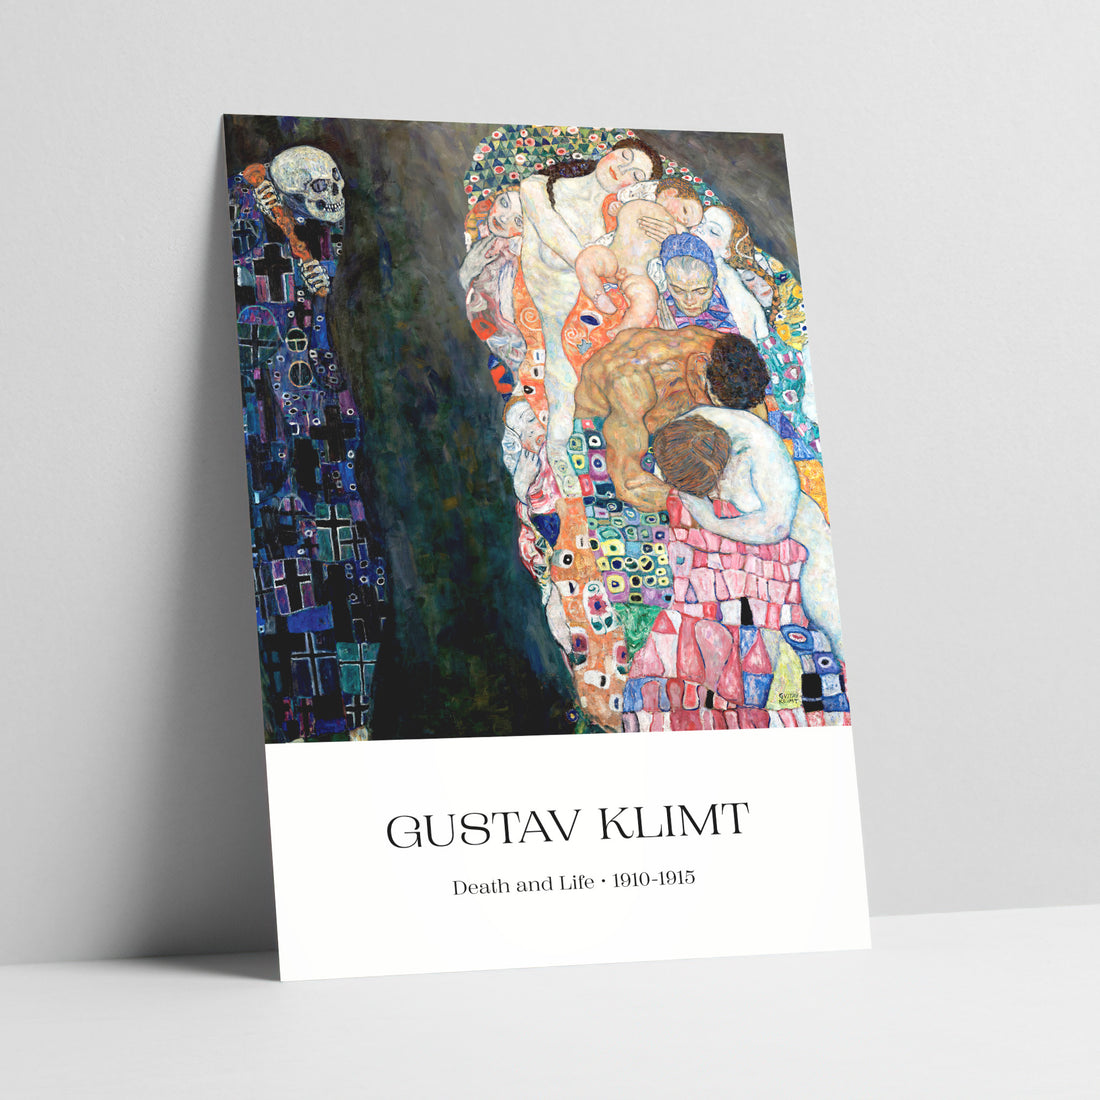 Death and Life by Gustav Klimt Gallery Art Print